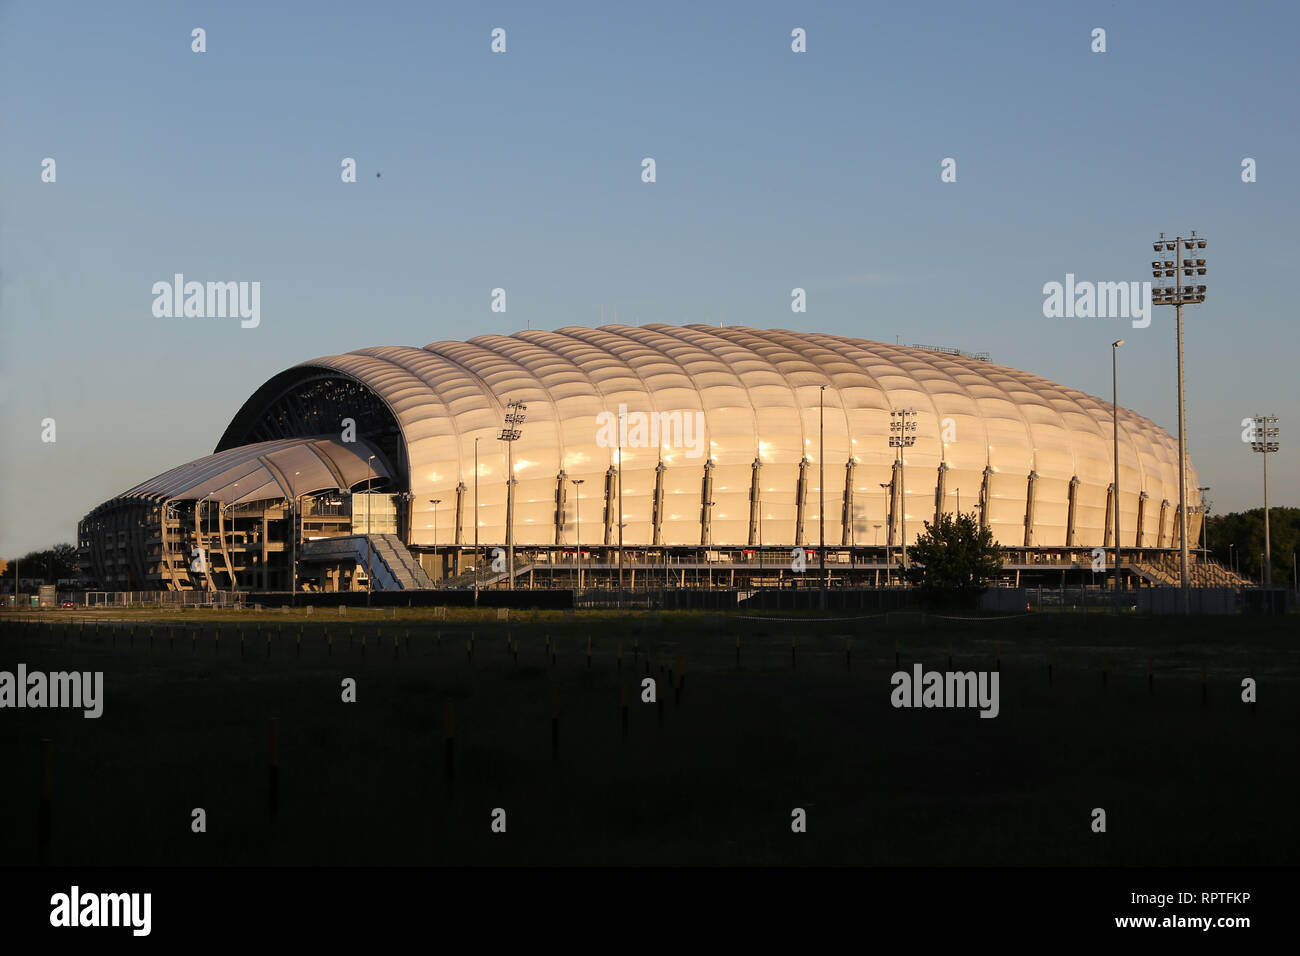 The INEA Stadium, home to Polish Ekstraklasa side Lech Poznan at dusk Stock Photo